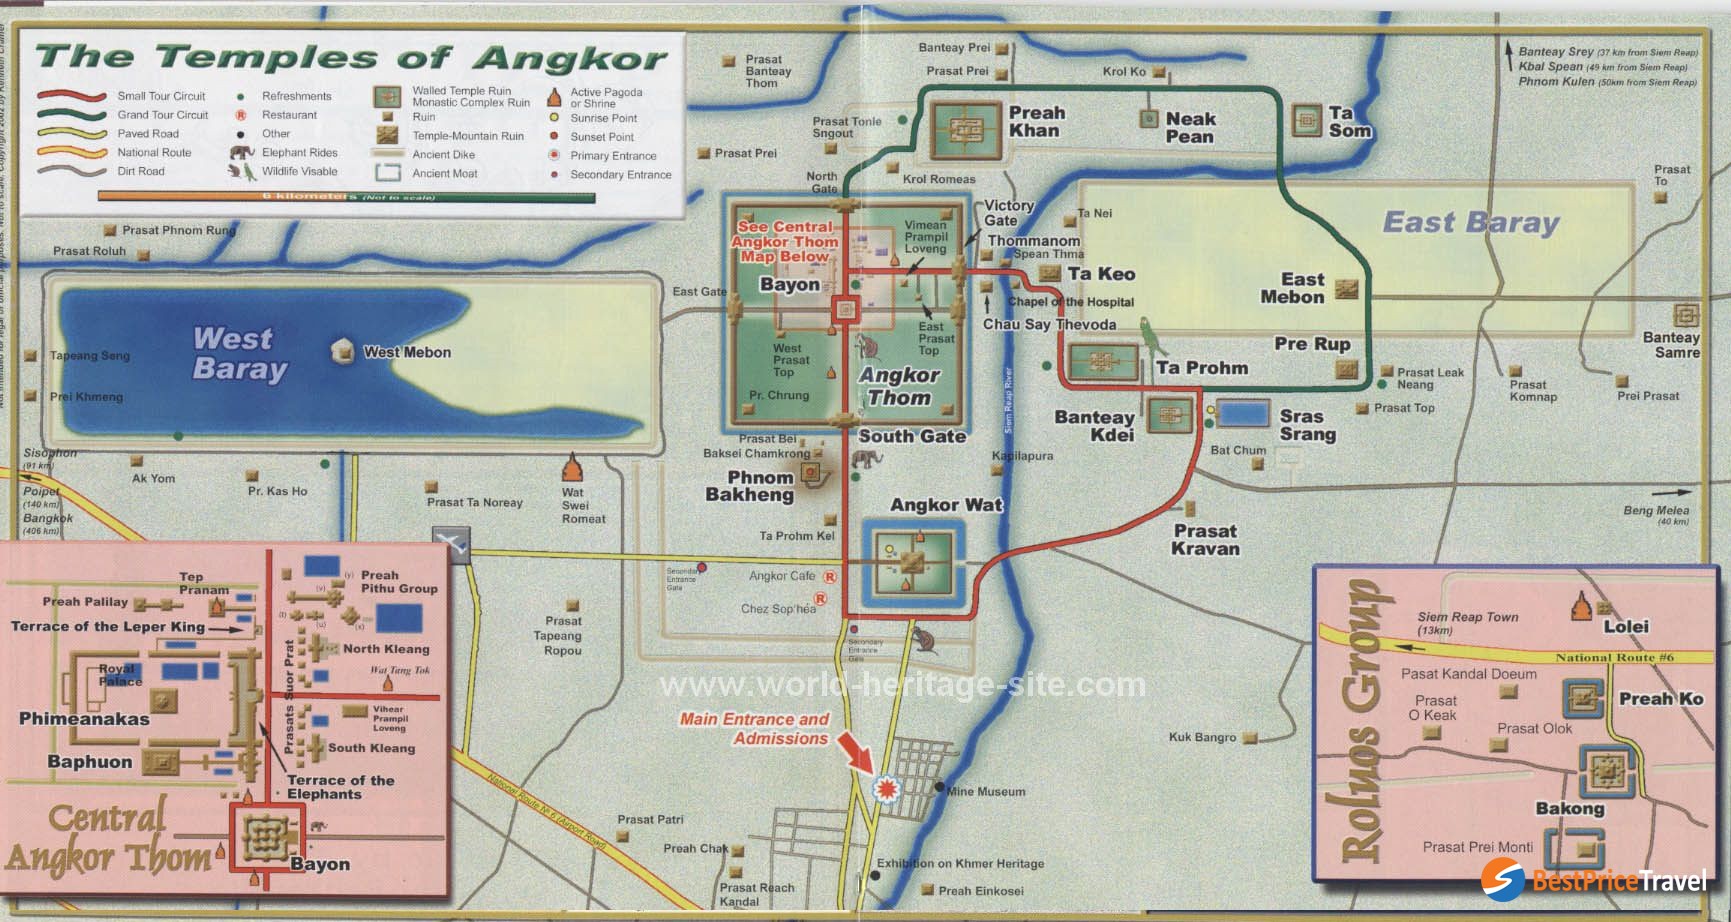 Angkor complex's map